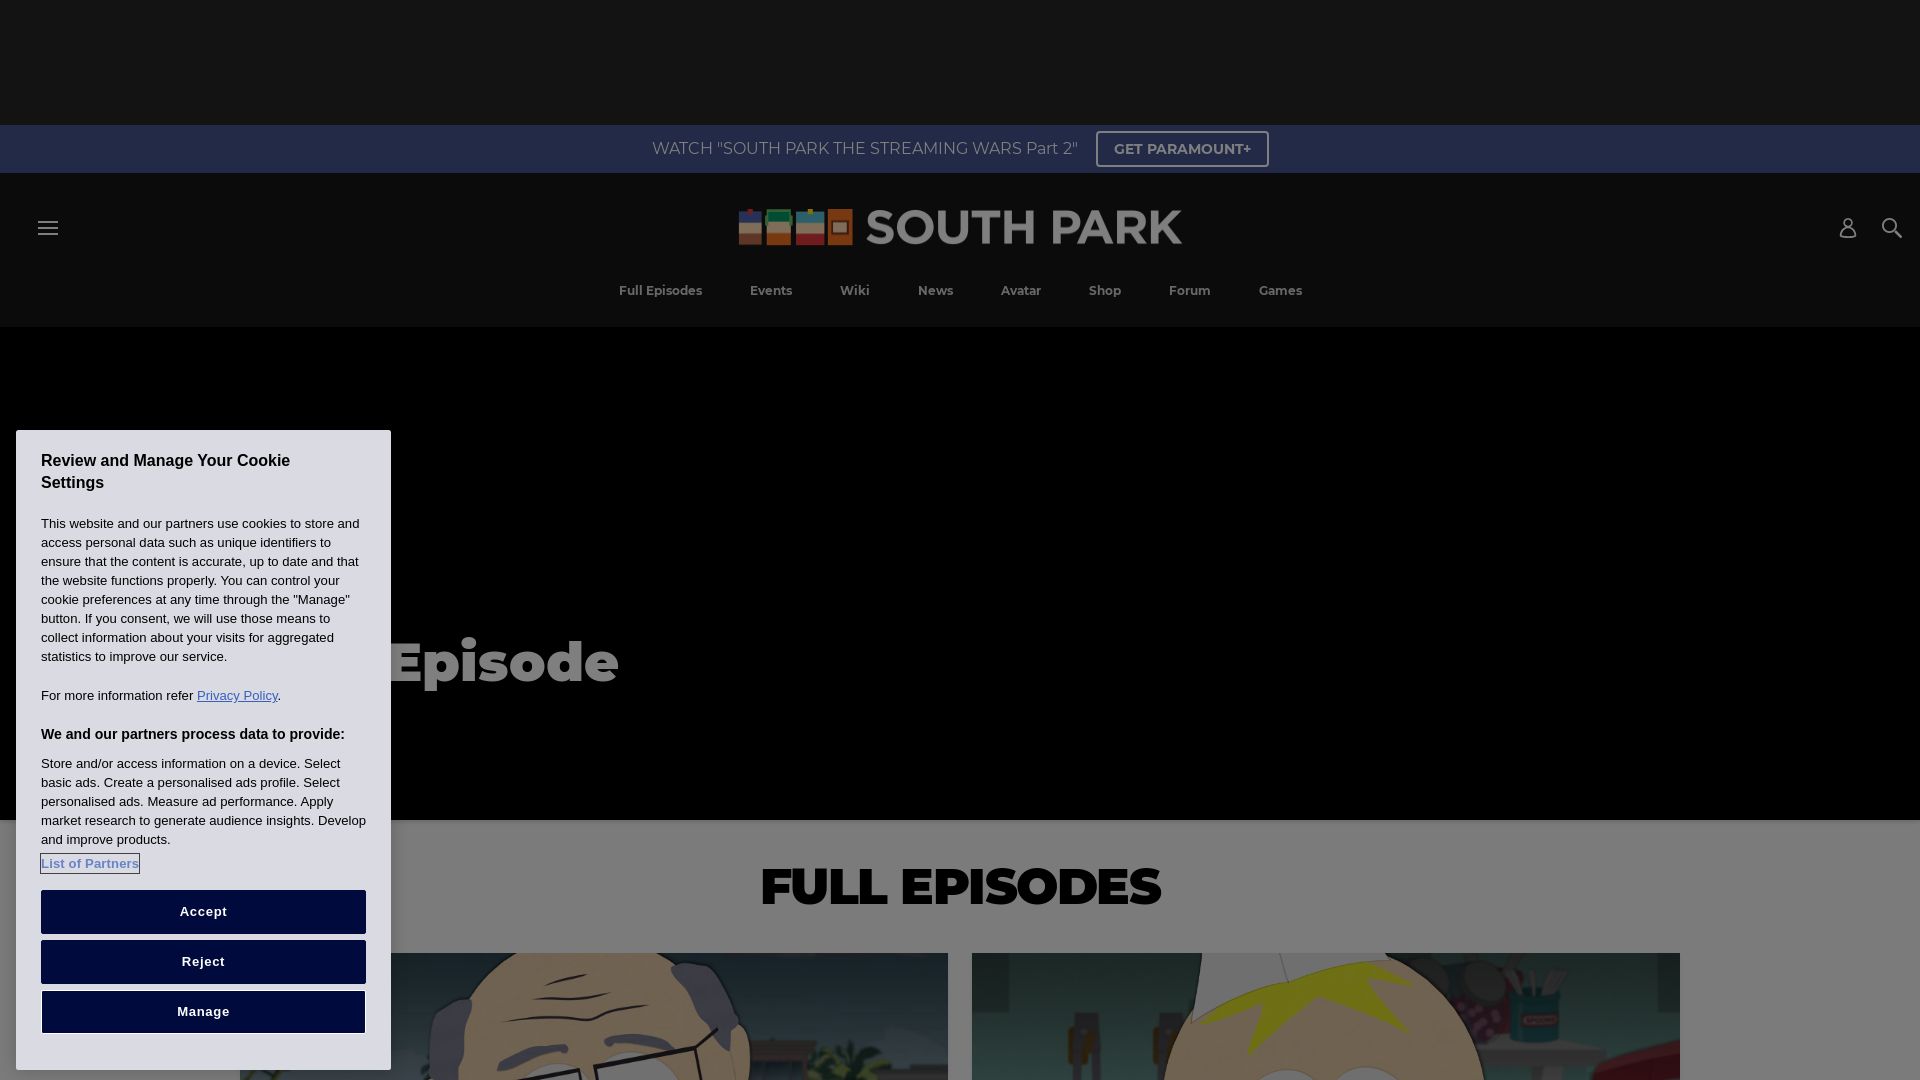 Website status southparkstudios.com is   ONLINE